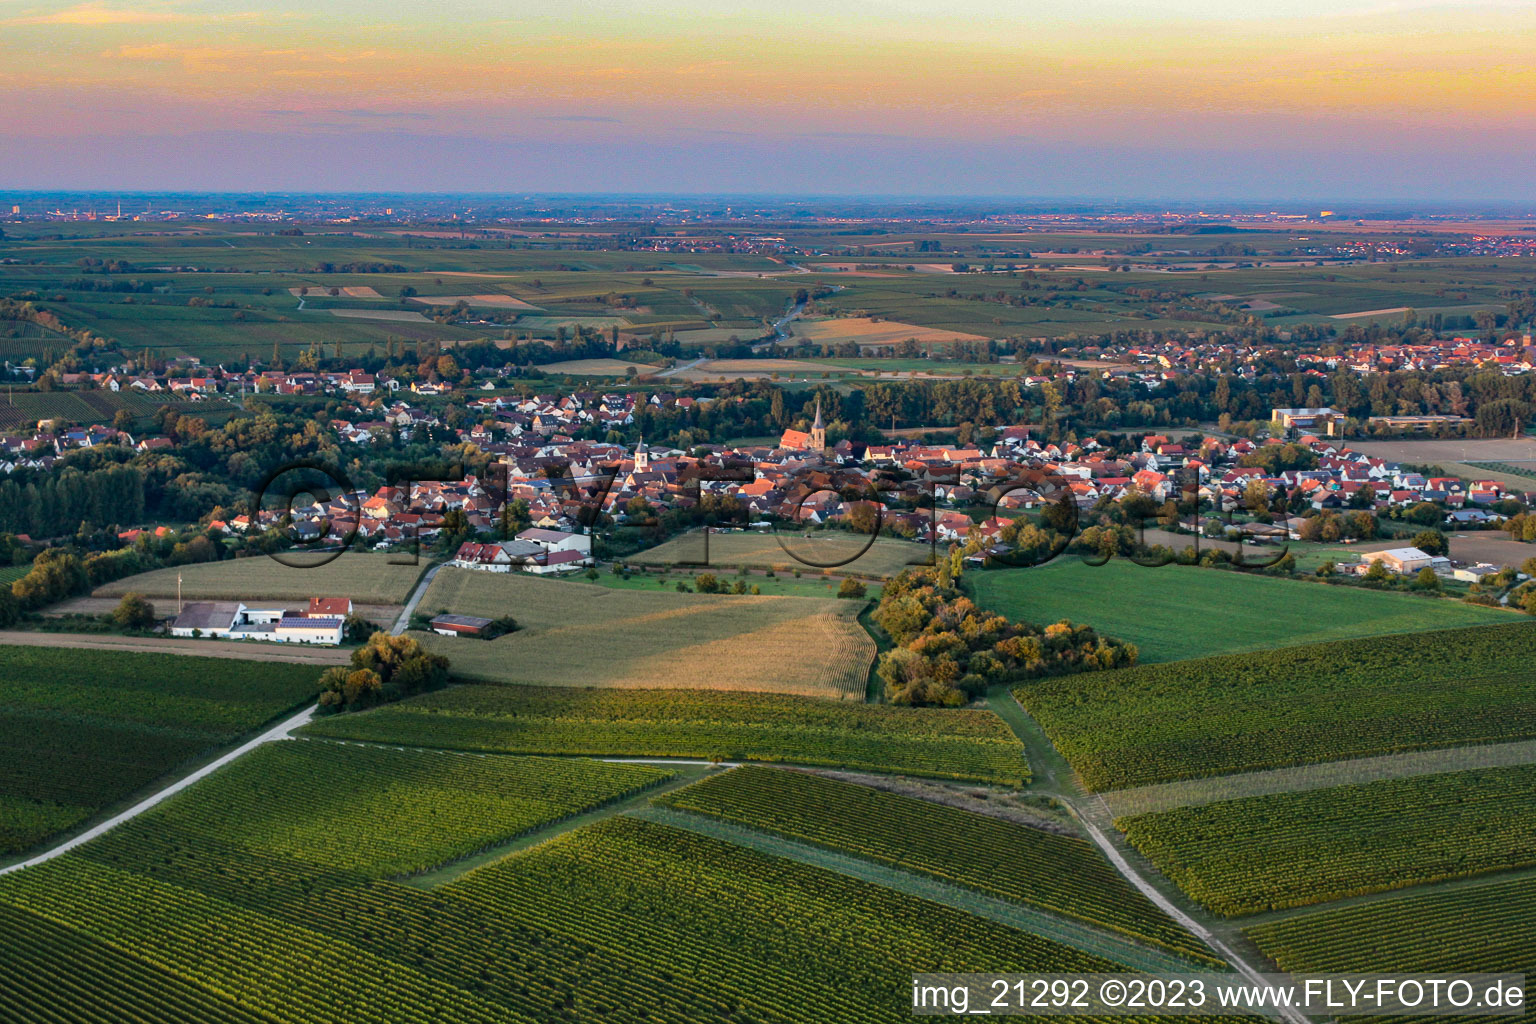 Quartier Ingenheim in Billigheim-Ingenheim dans le département Rhénanie-Palatinat, Allemagne du point de vue du drone